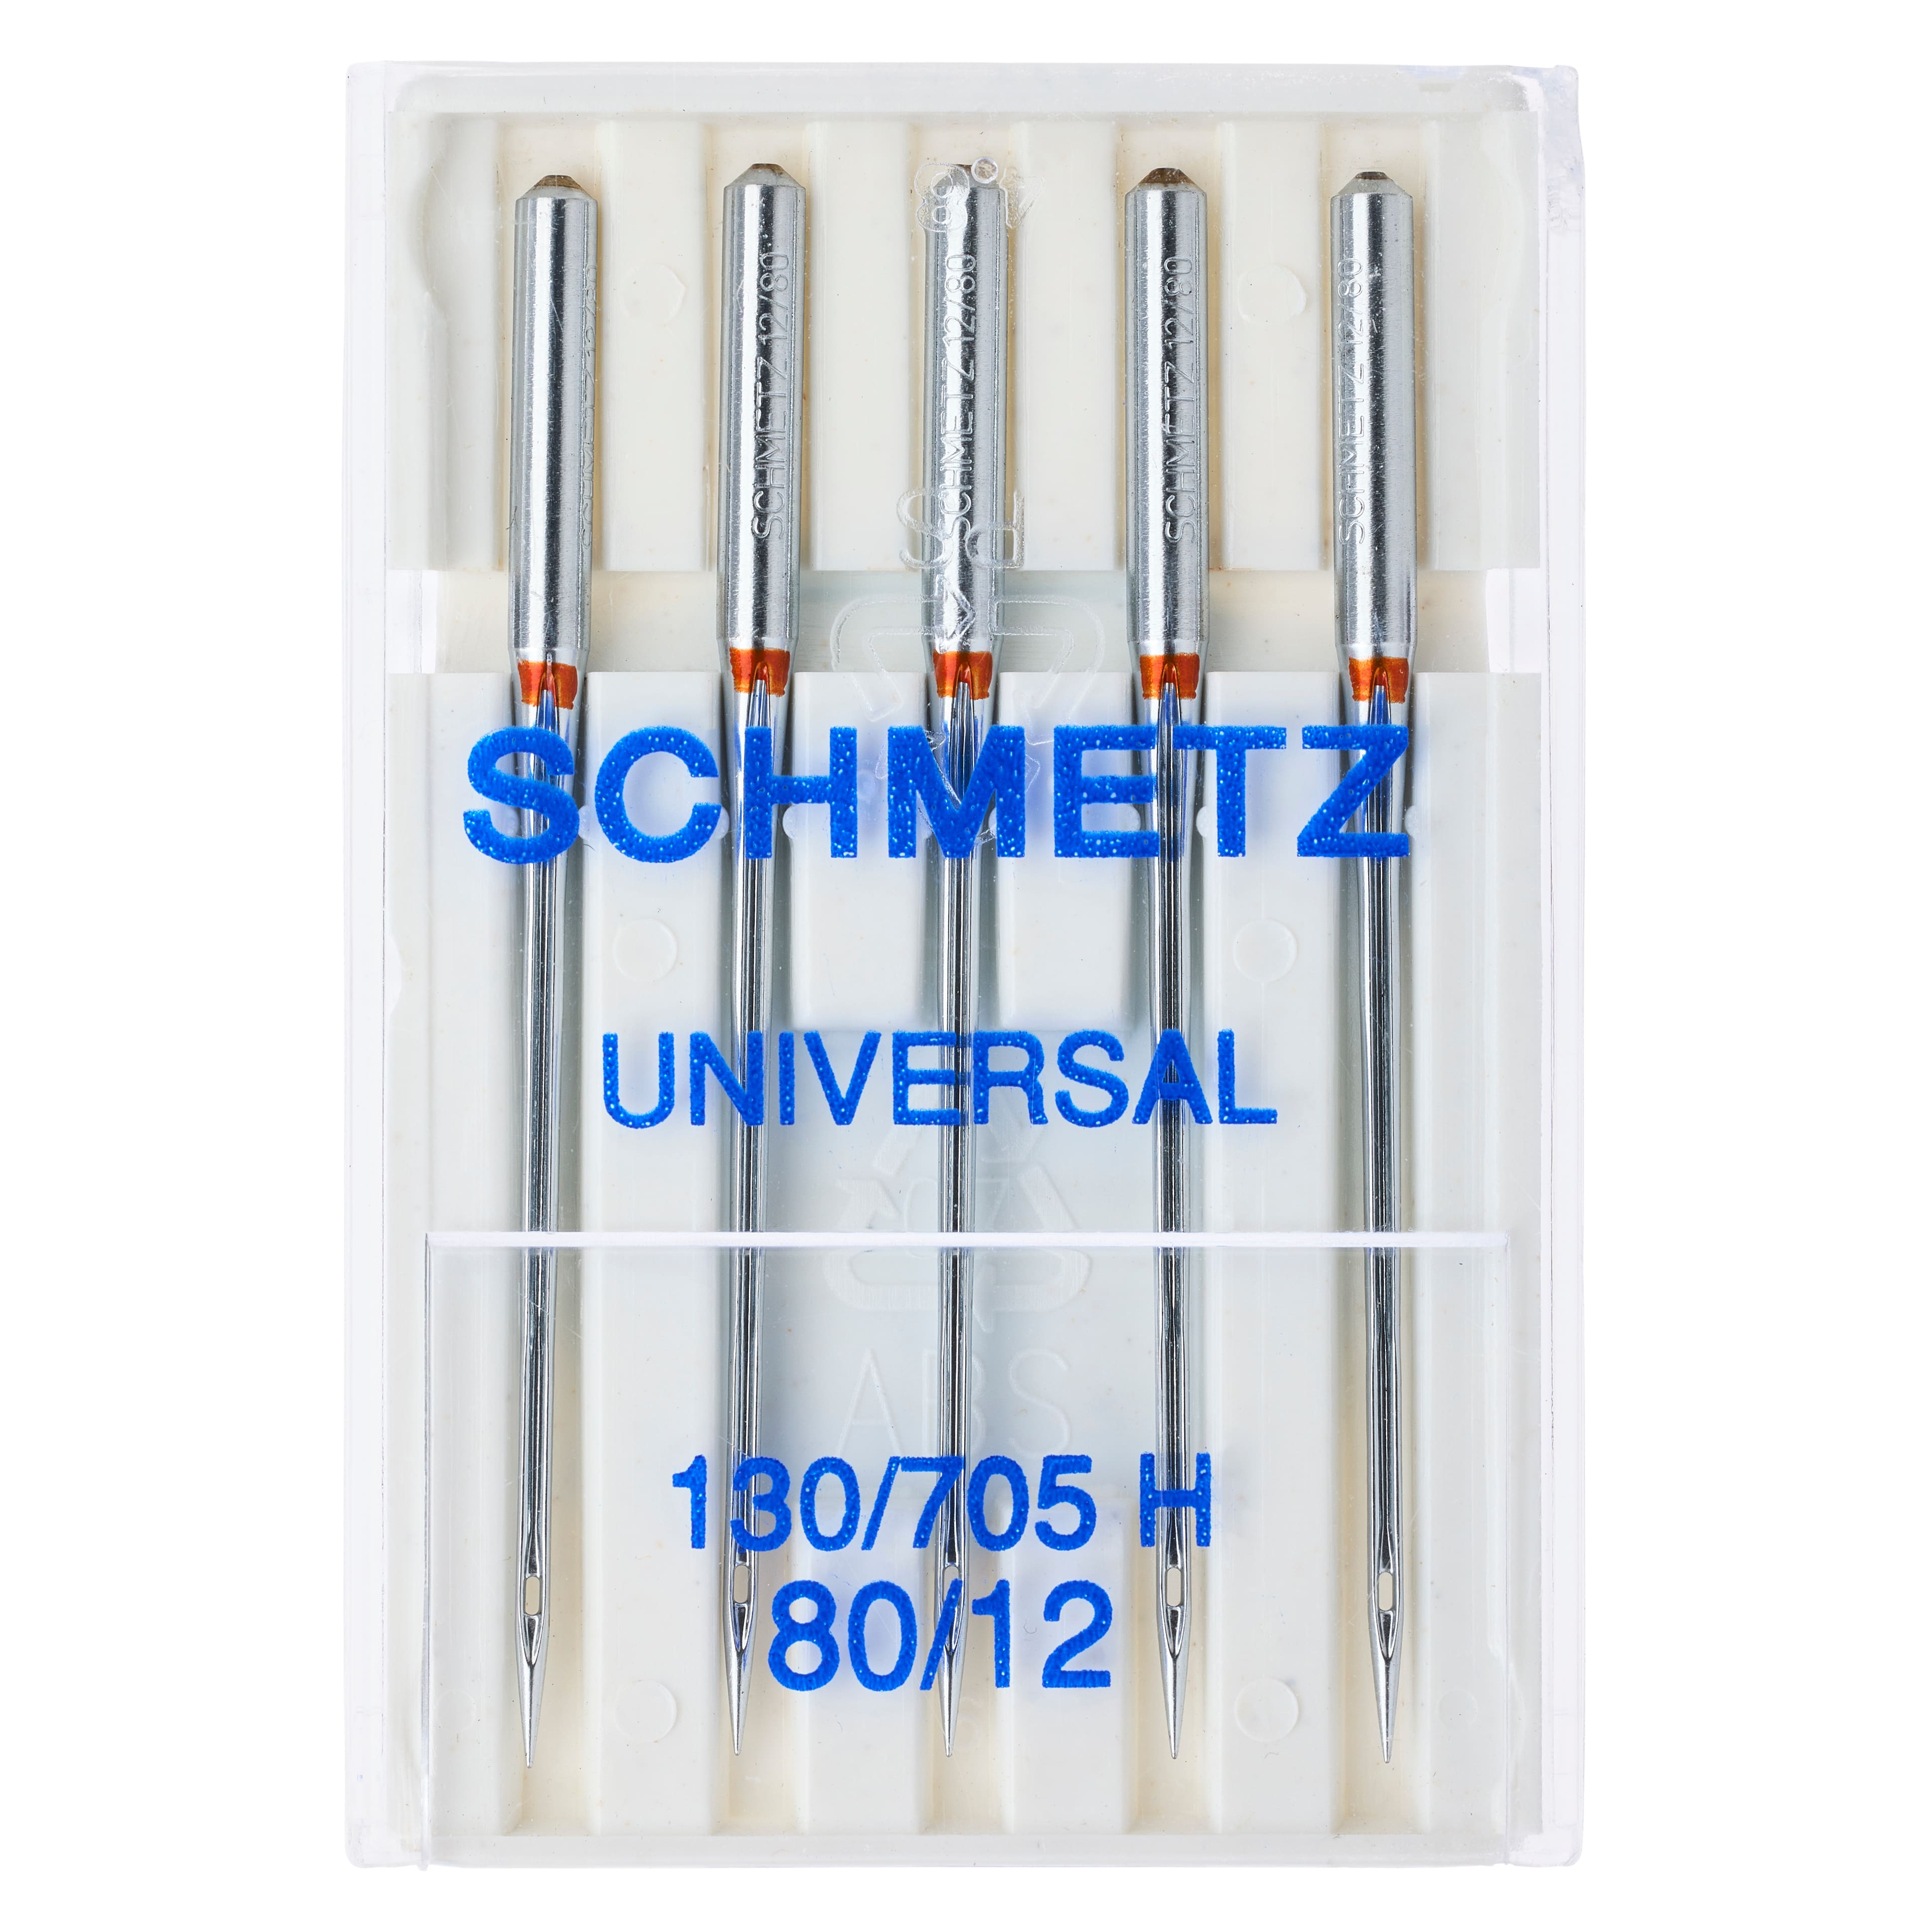 Schmetz 80/12 Universal Needles - Each